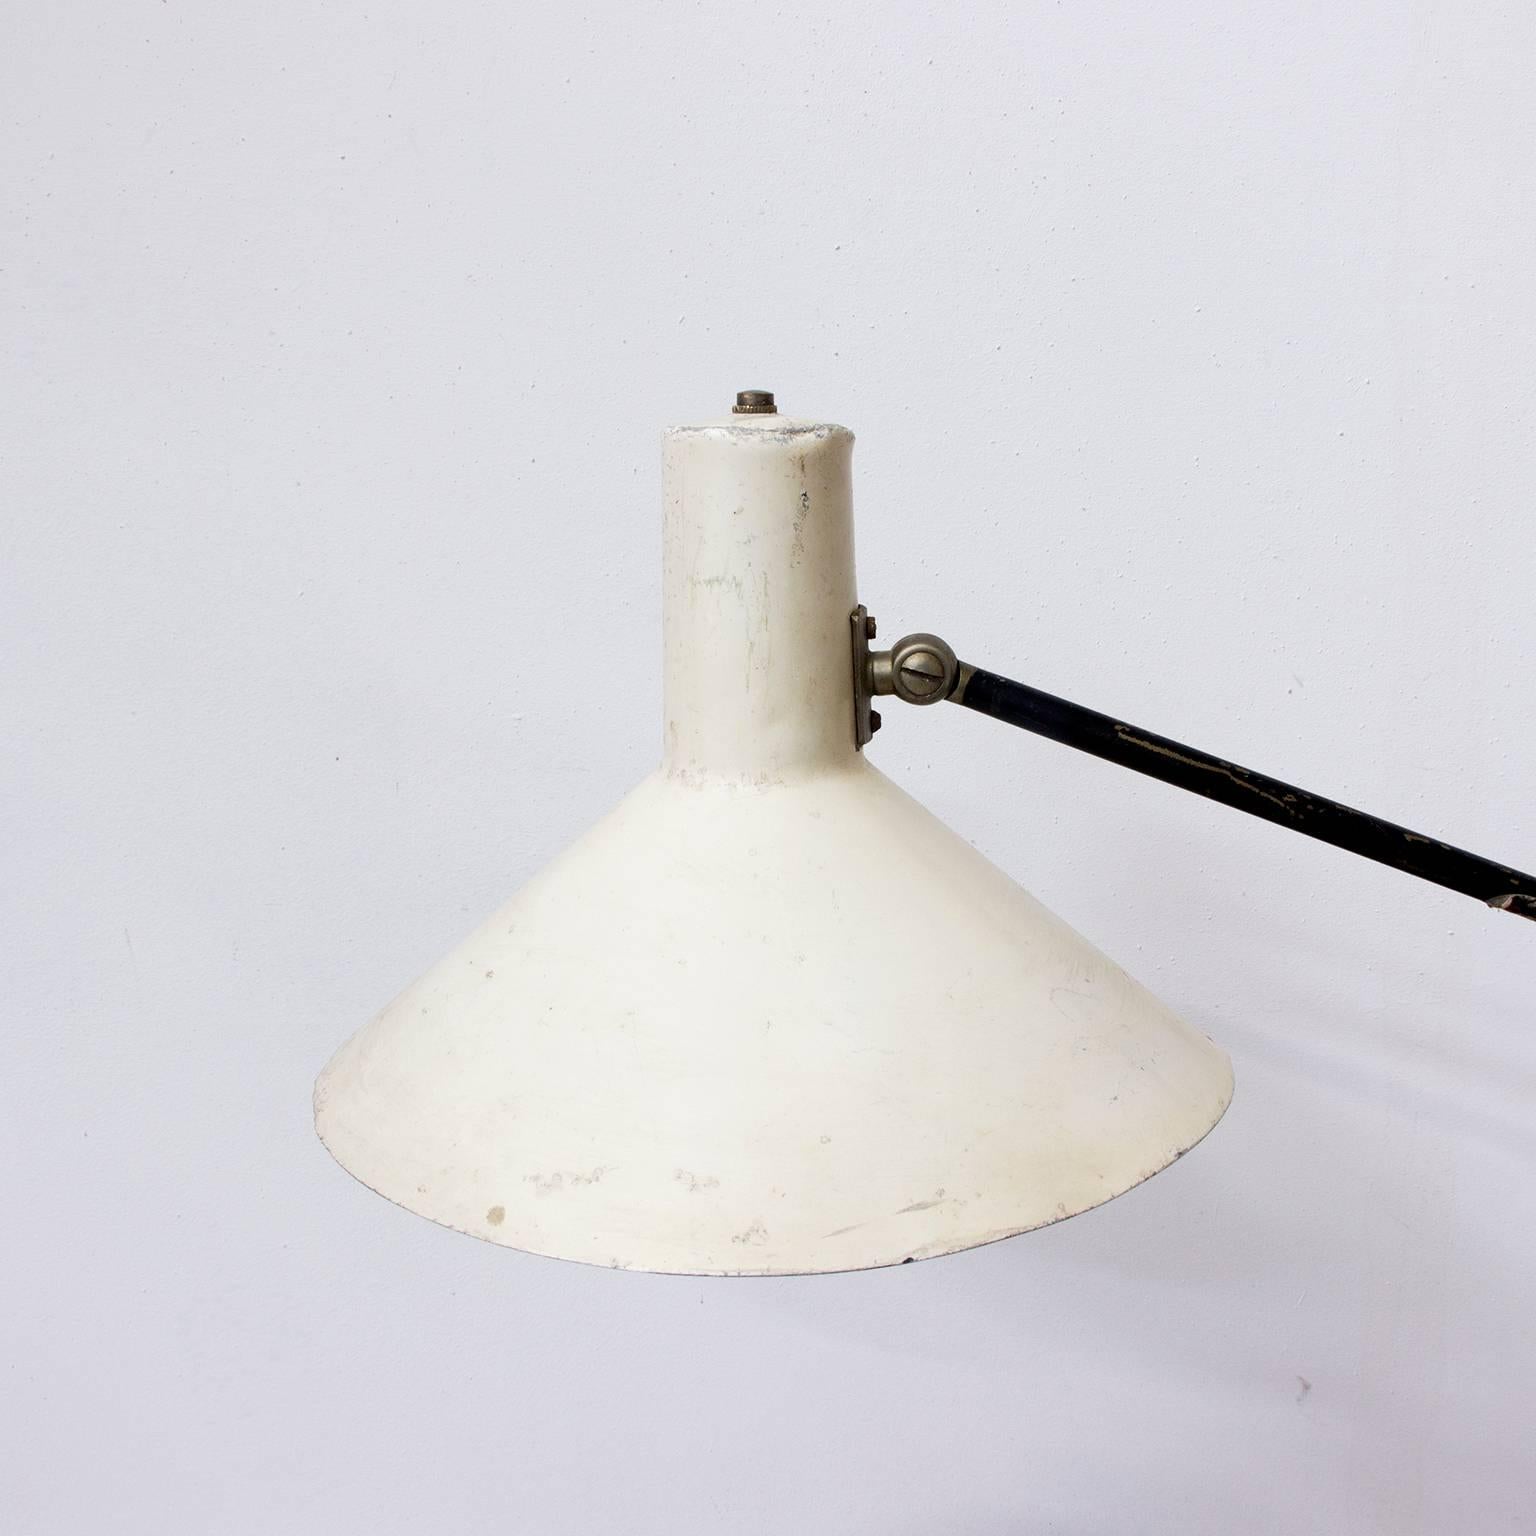 Very Rare, Elegant and Adjustable Vintage Floor Lamp, circa 1960 (Mitte des 20. Jahrhunderts)